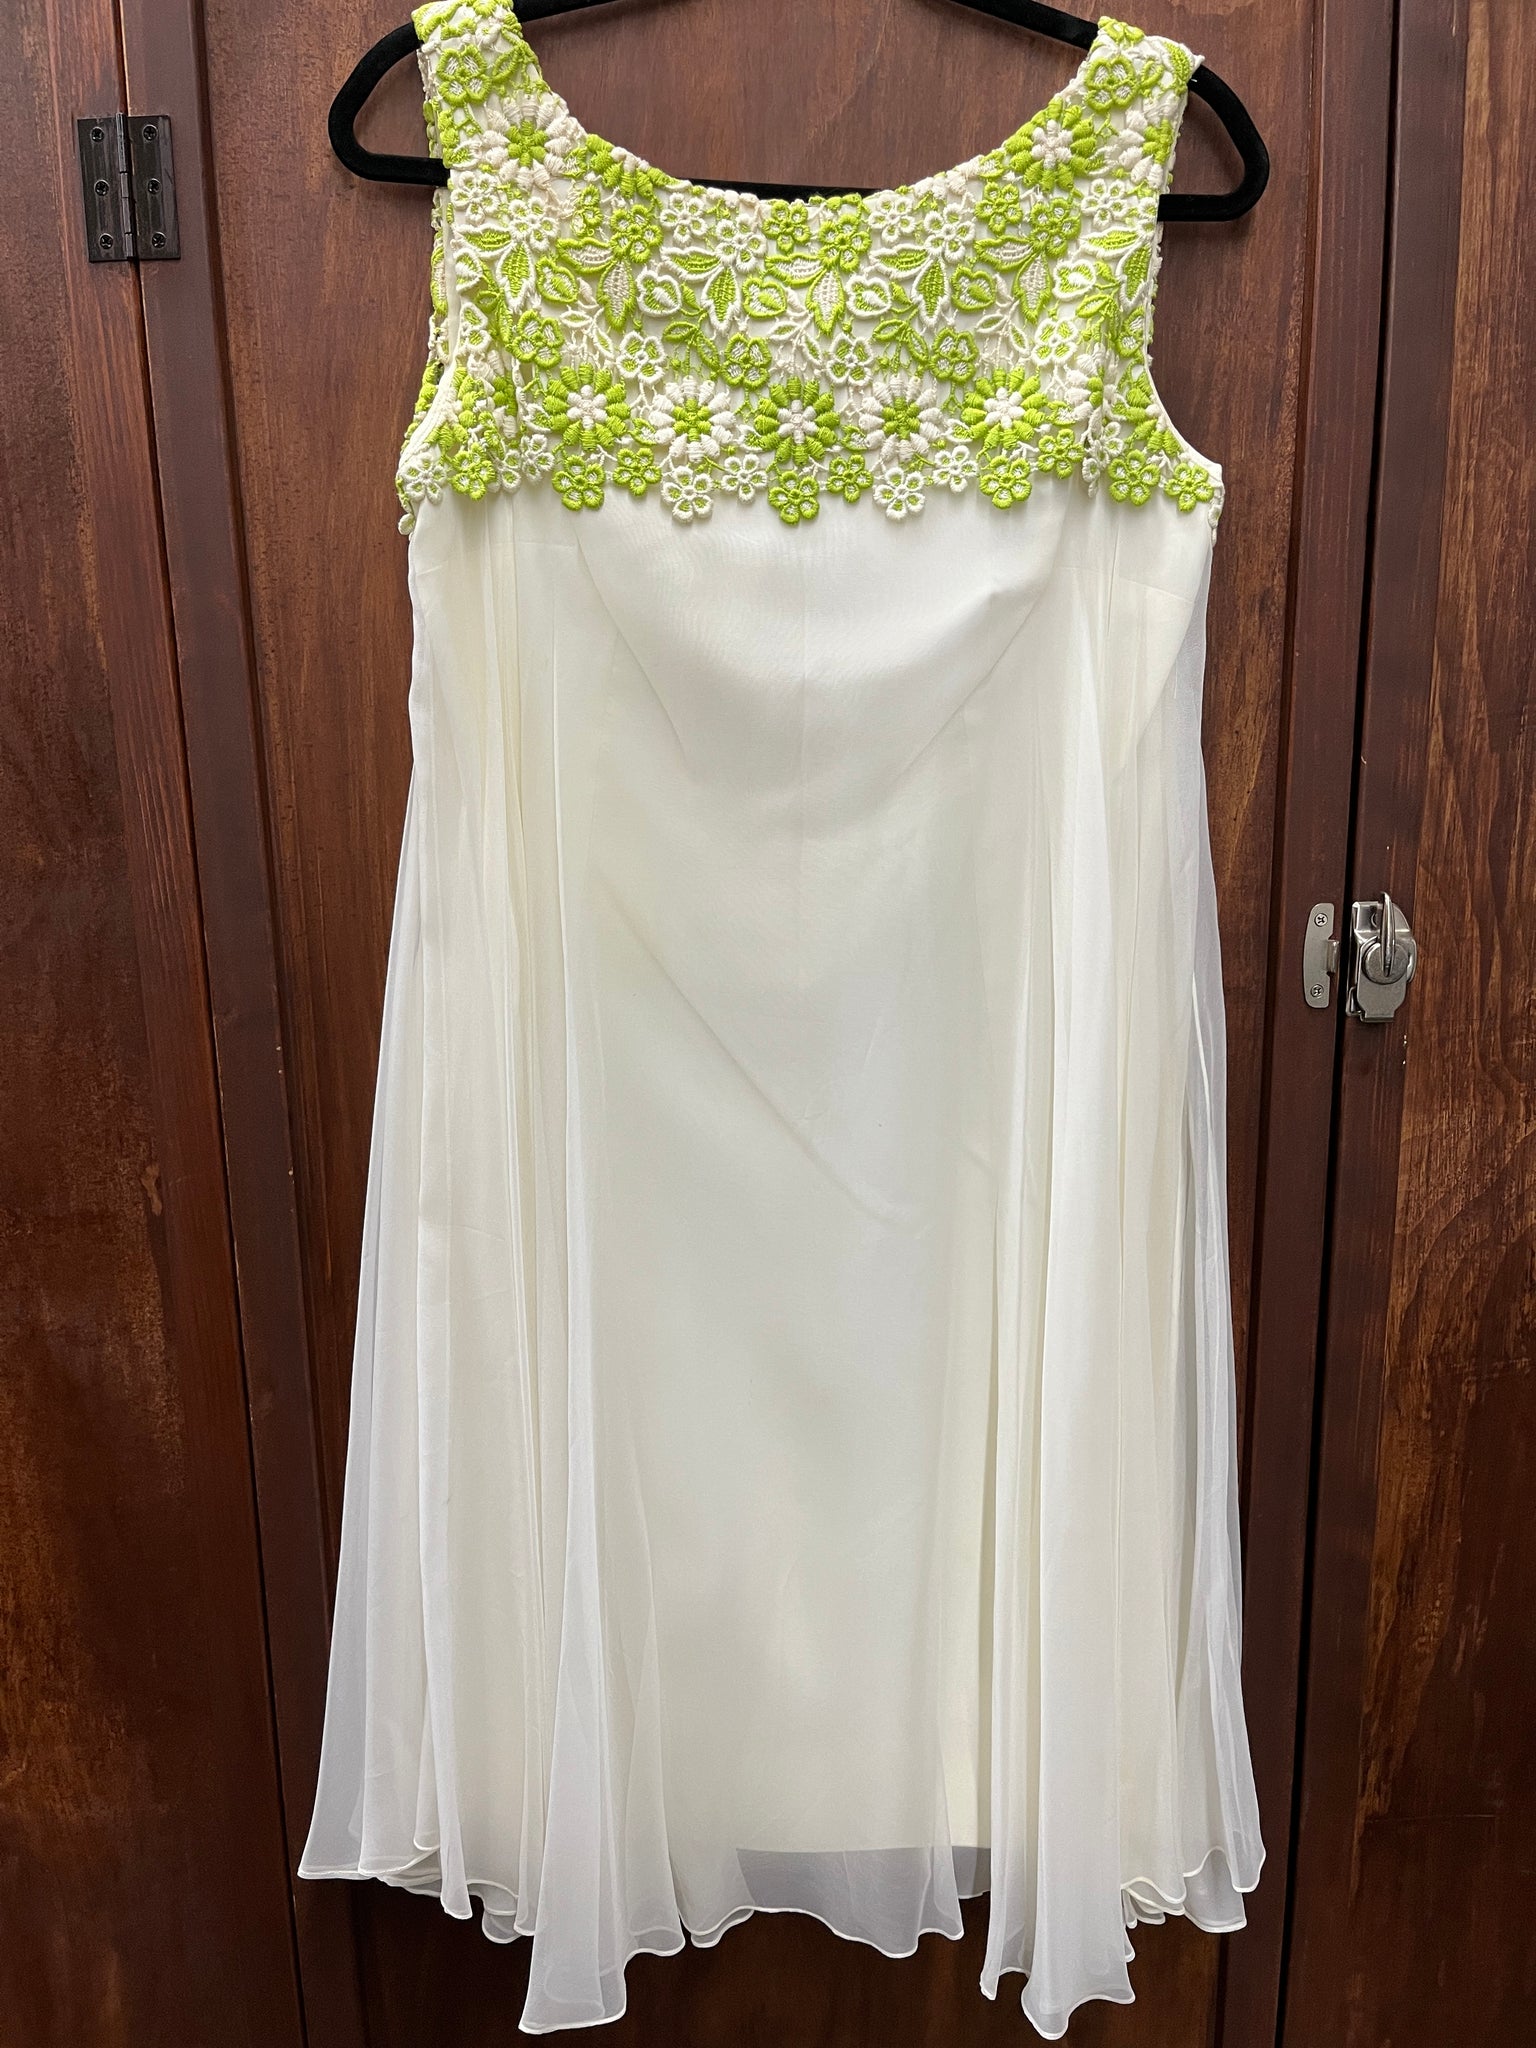 1960S DRESS- cream chiffon dress w/ green embroidered detail